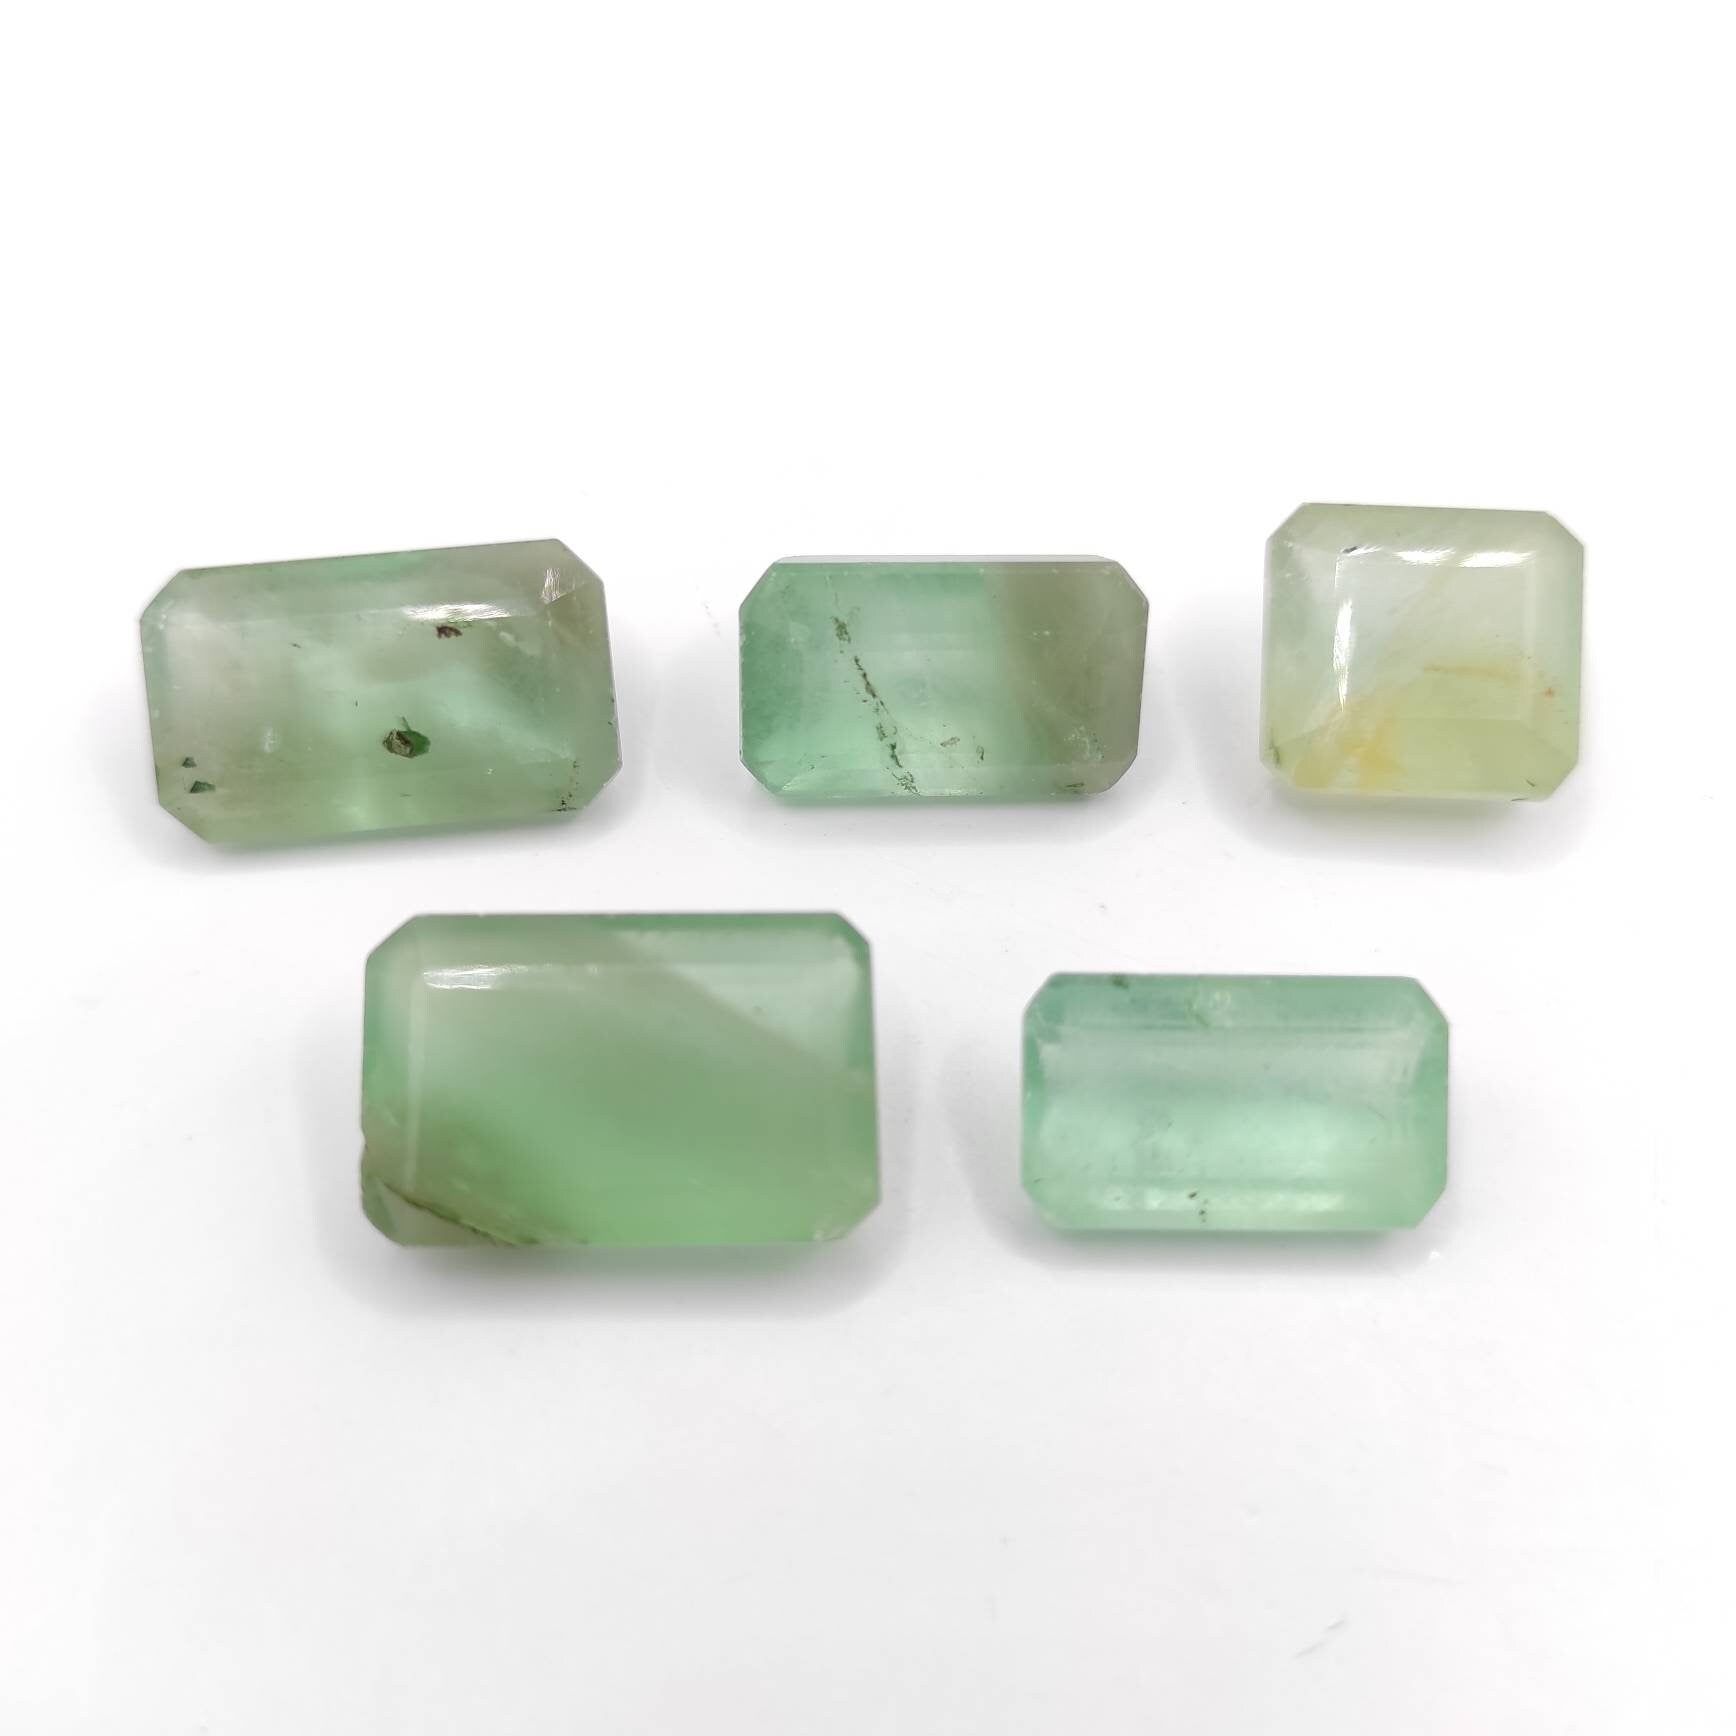 95ct 5pc Lot of Fluorite - Faceted Fluorite Gemstones - Pakistan Green Fluorite Cut Gems - Natural Fluorite Loose Stones - Loose Gemstones